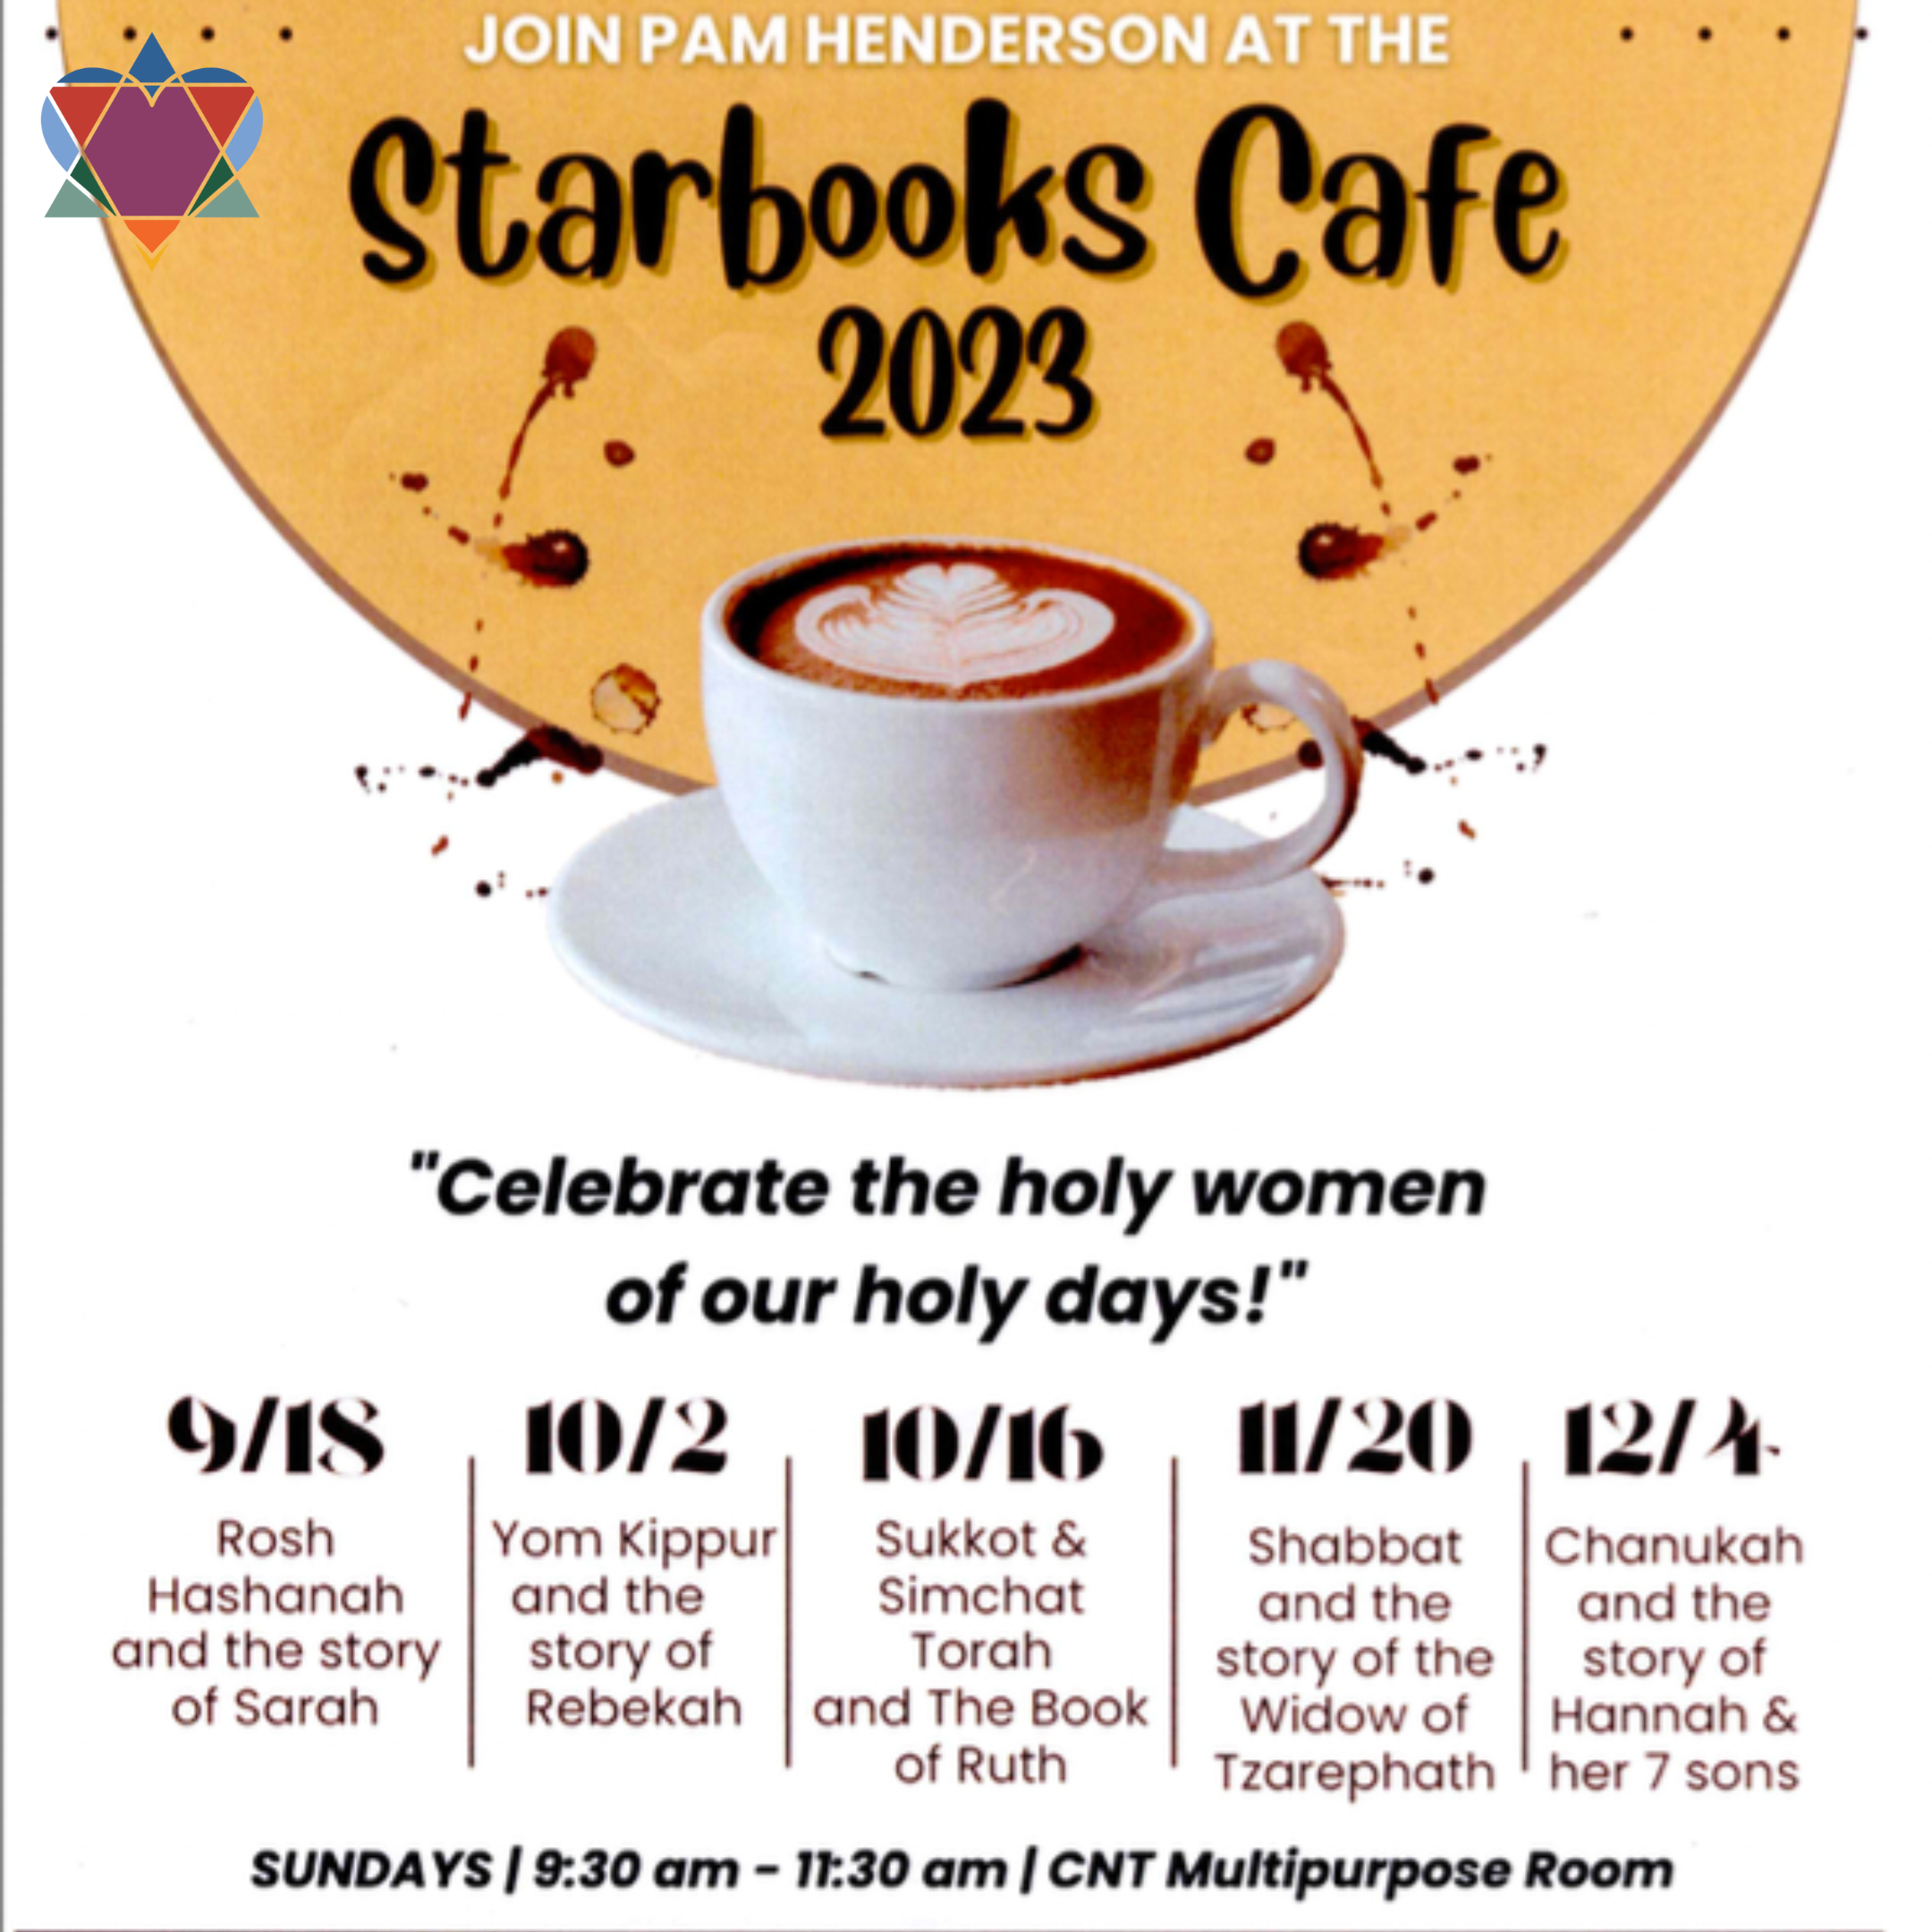 STARBOOKS CAFÉ: YOM KIPPUR AND THE STORY OF REBEKAH